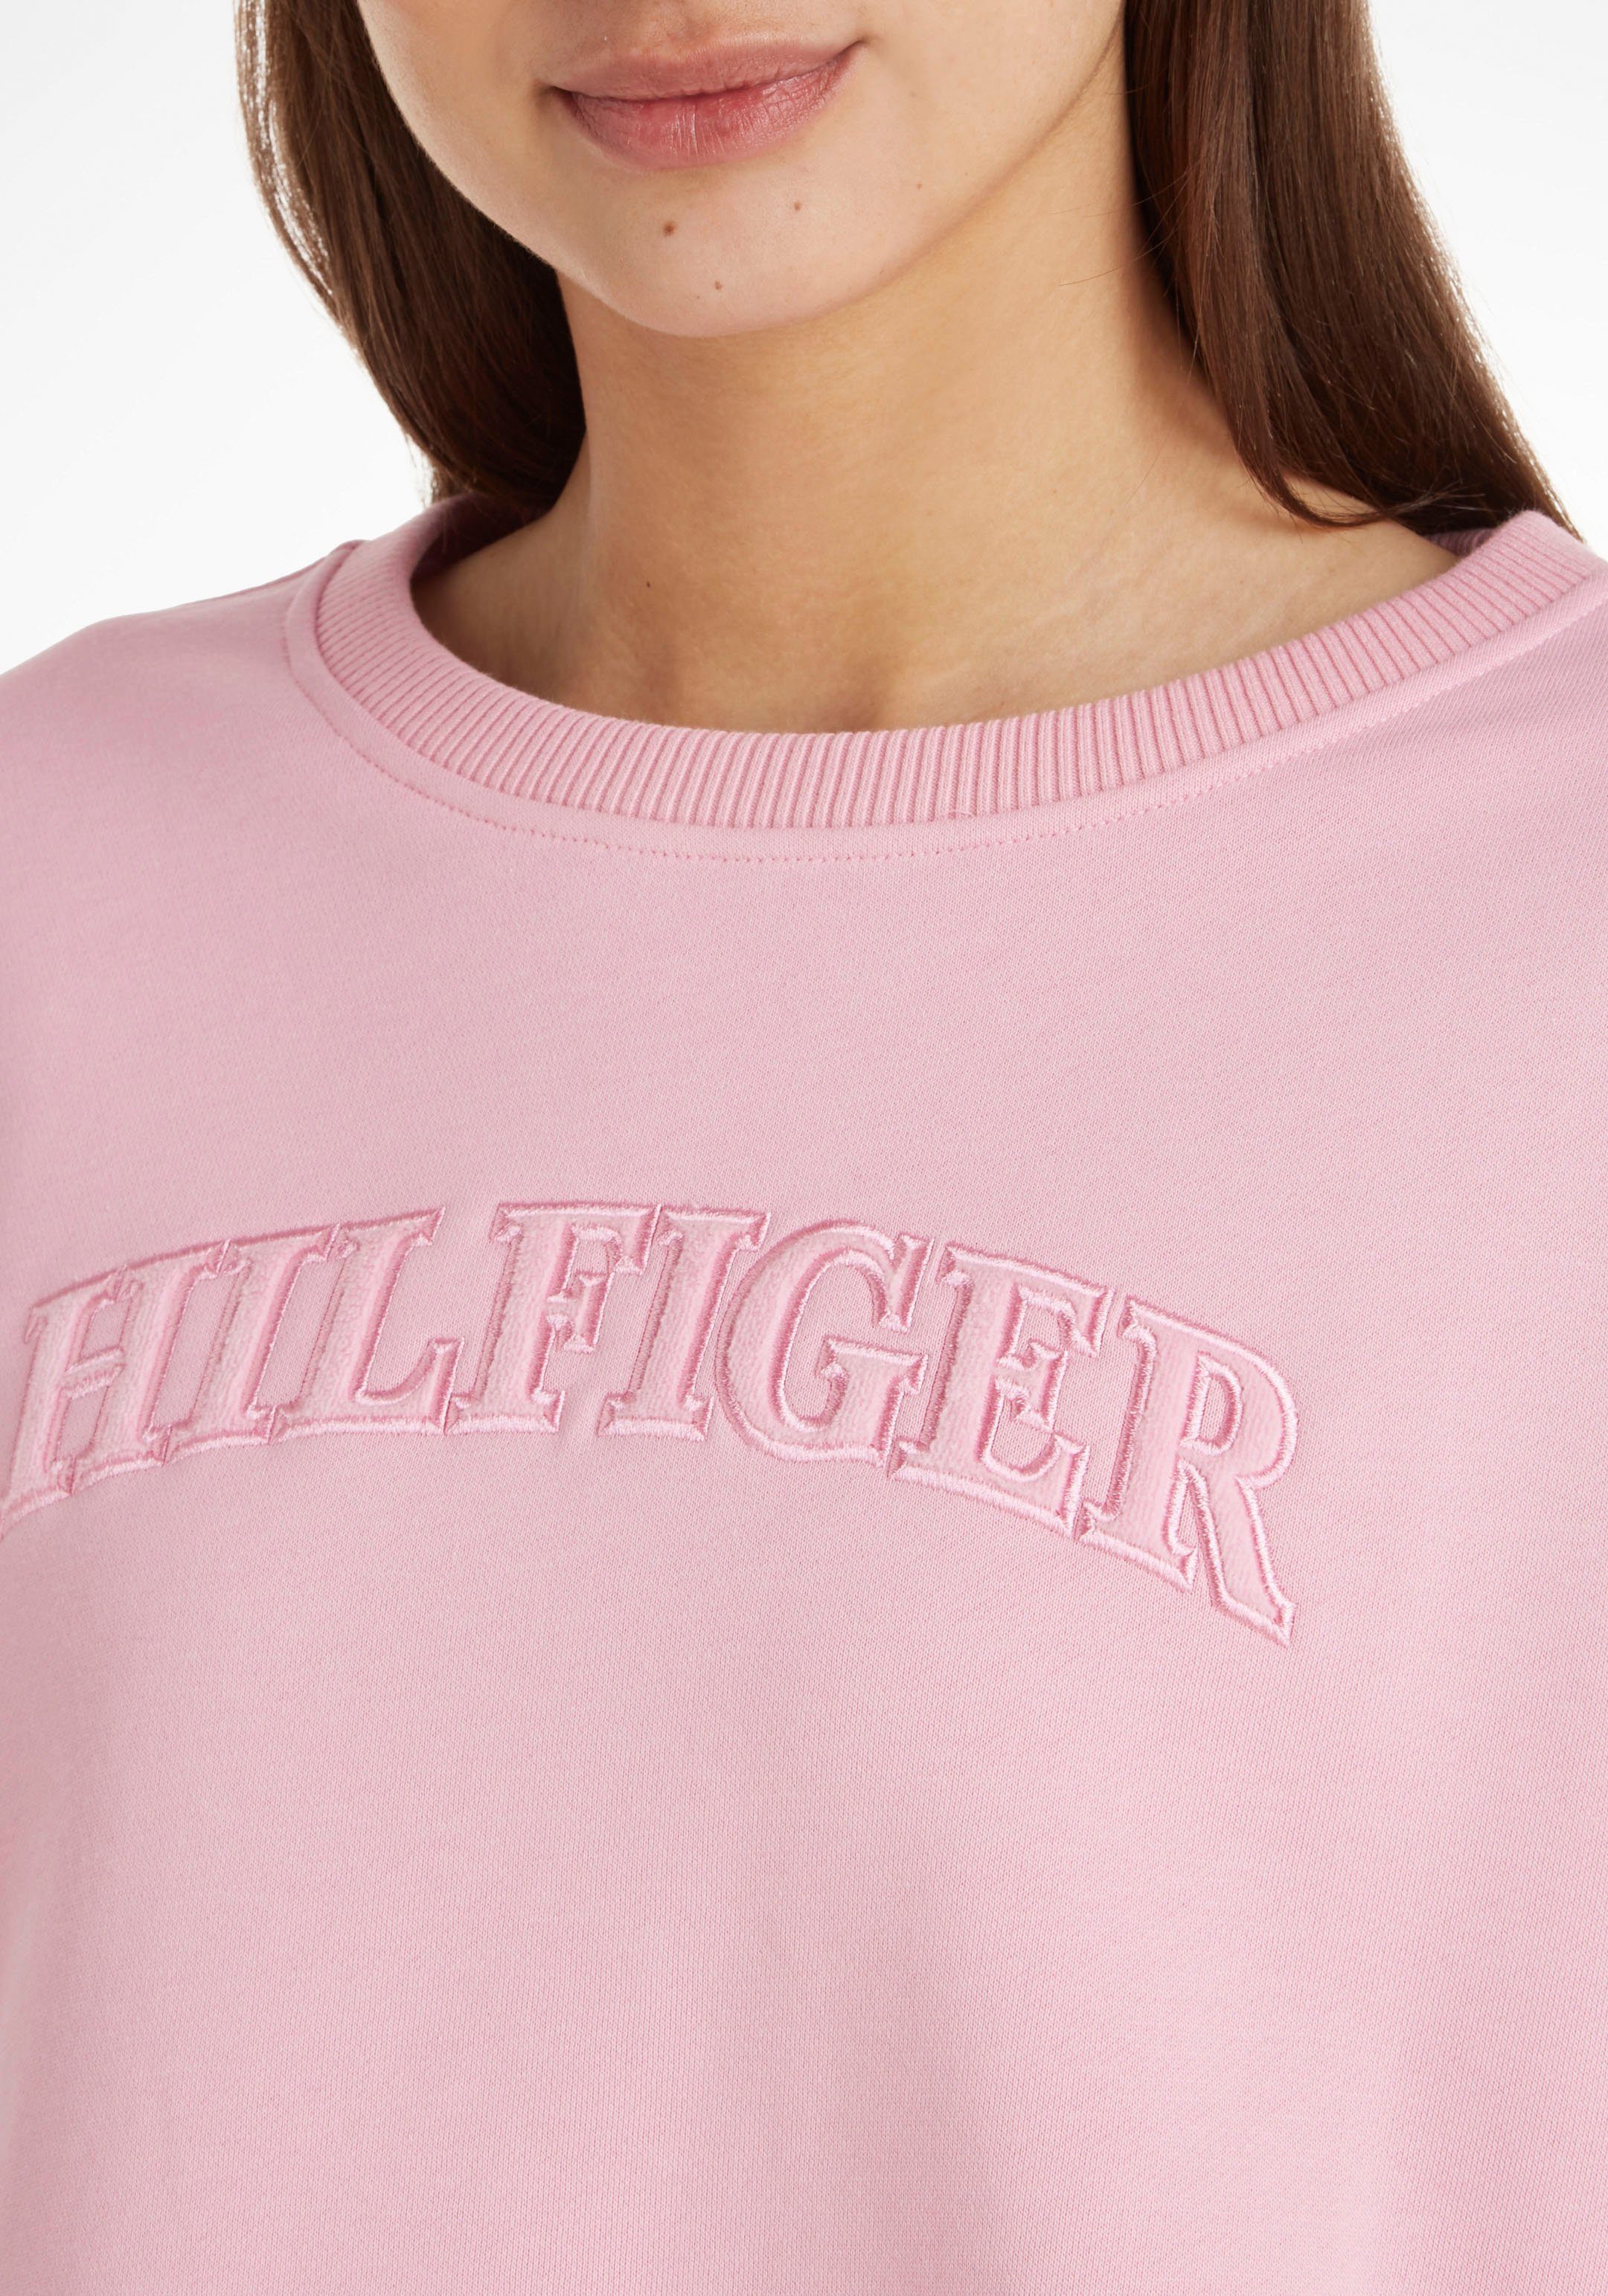 Classic-Pink Markenlabel RLX Hilfiger mit TONAL HILFIGER Sweatshirt Tommy SWTSHIRT O-NK Hilfiger Tommy